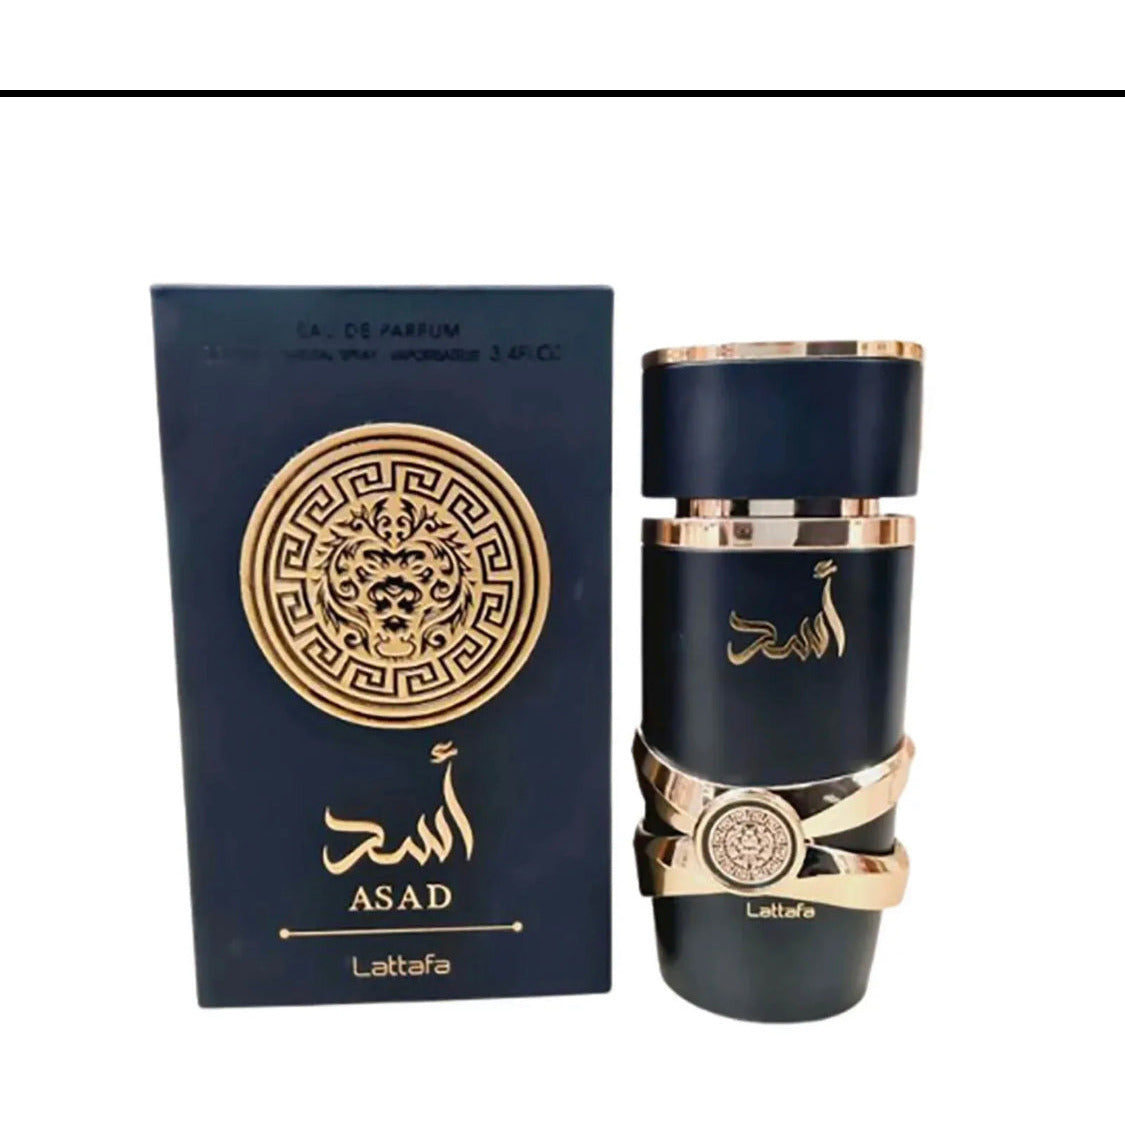 Asad by Lattafa – Fragrance of Arabia